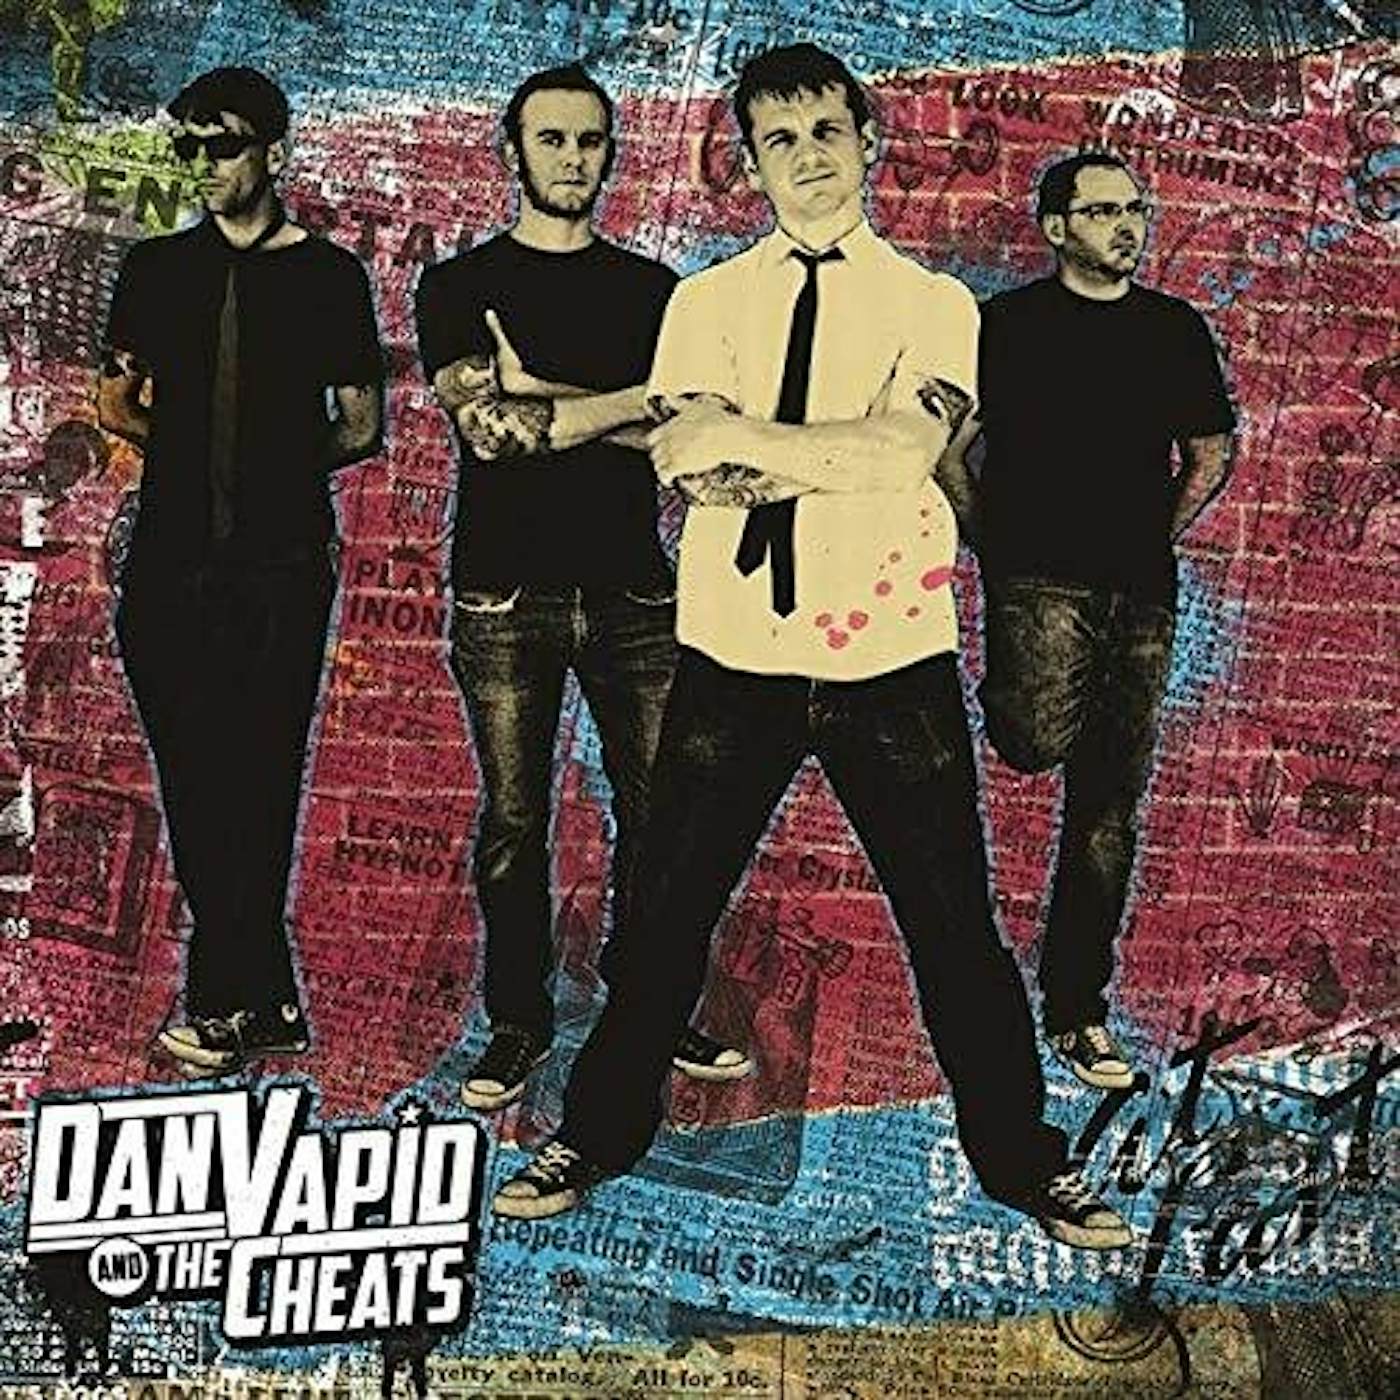 Dan Vapid & the Cheats Vinyl Record